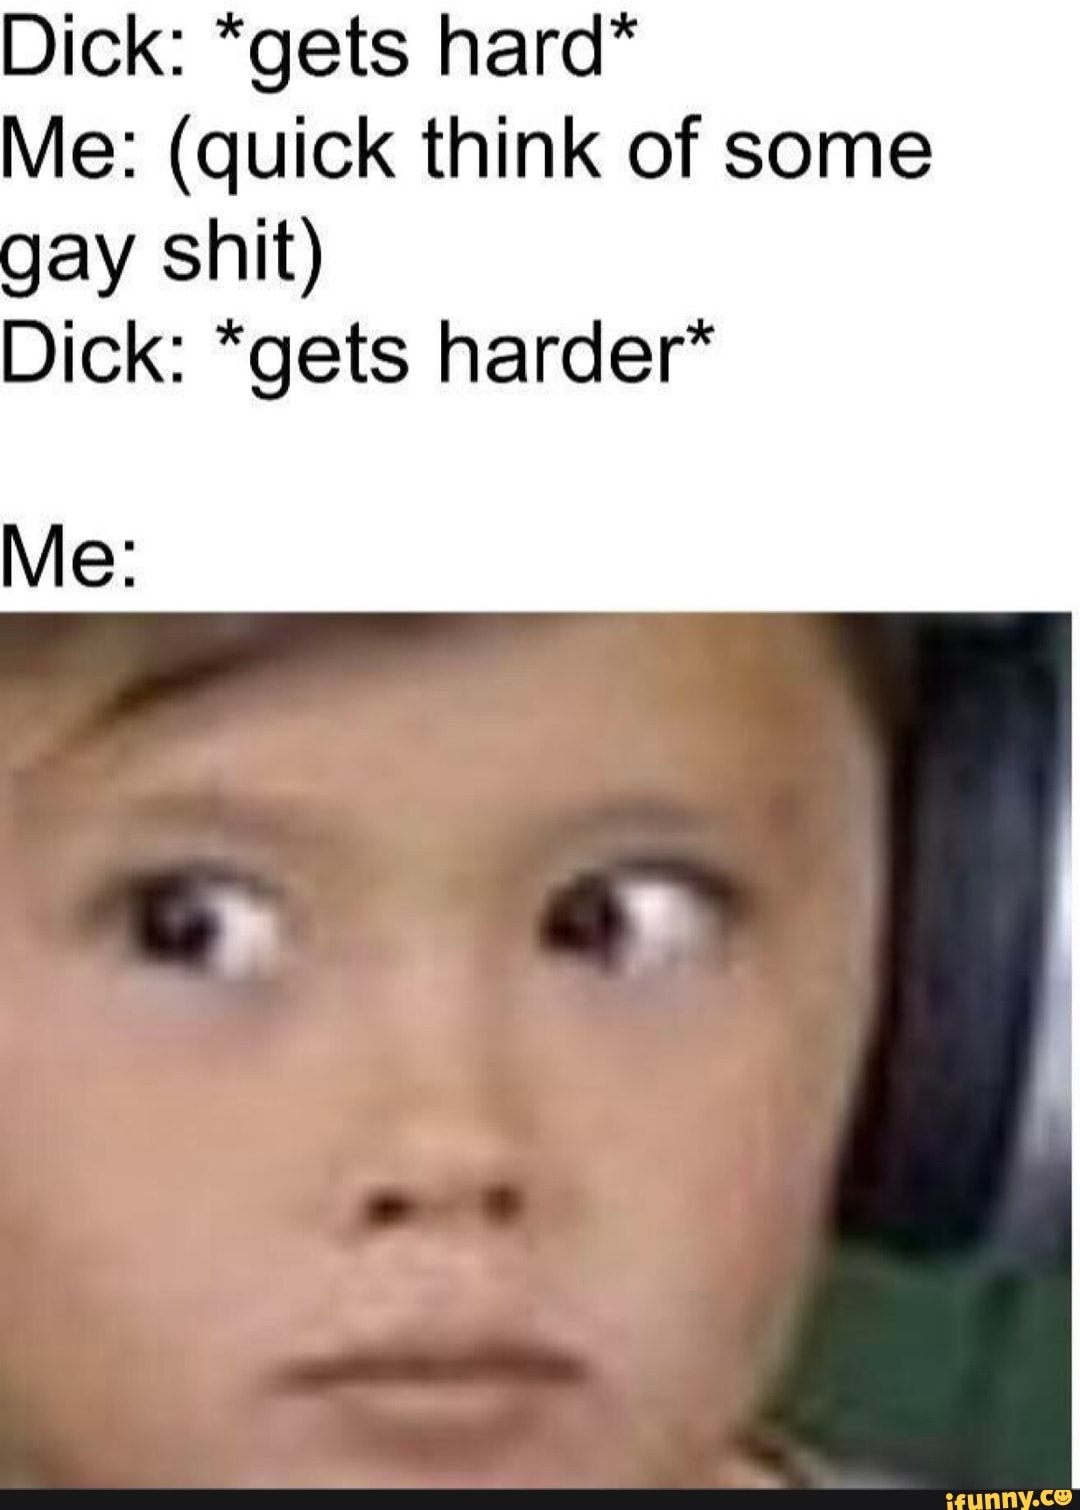 Get dick harder